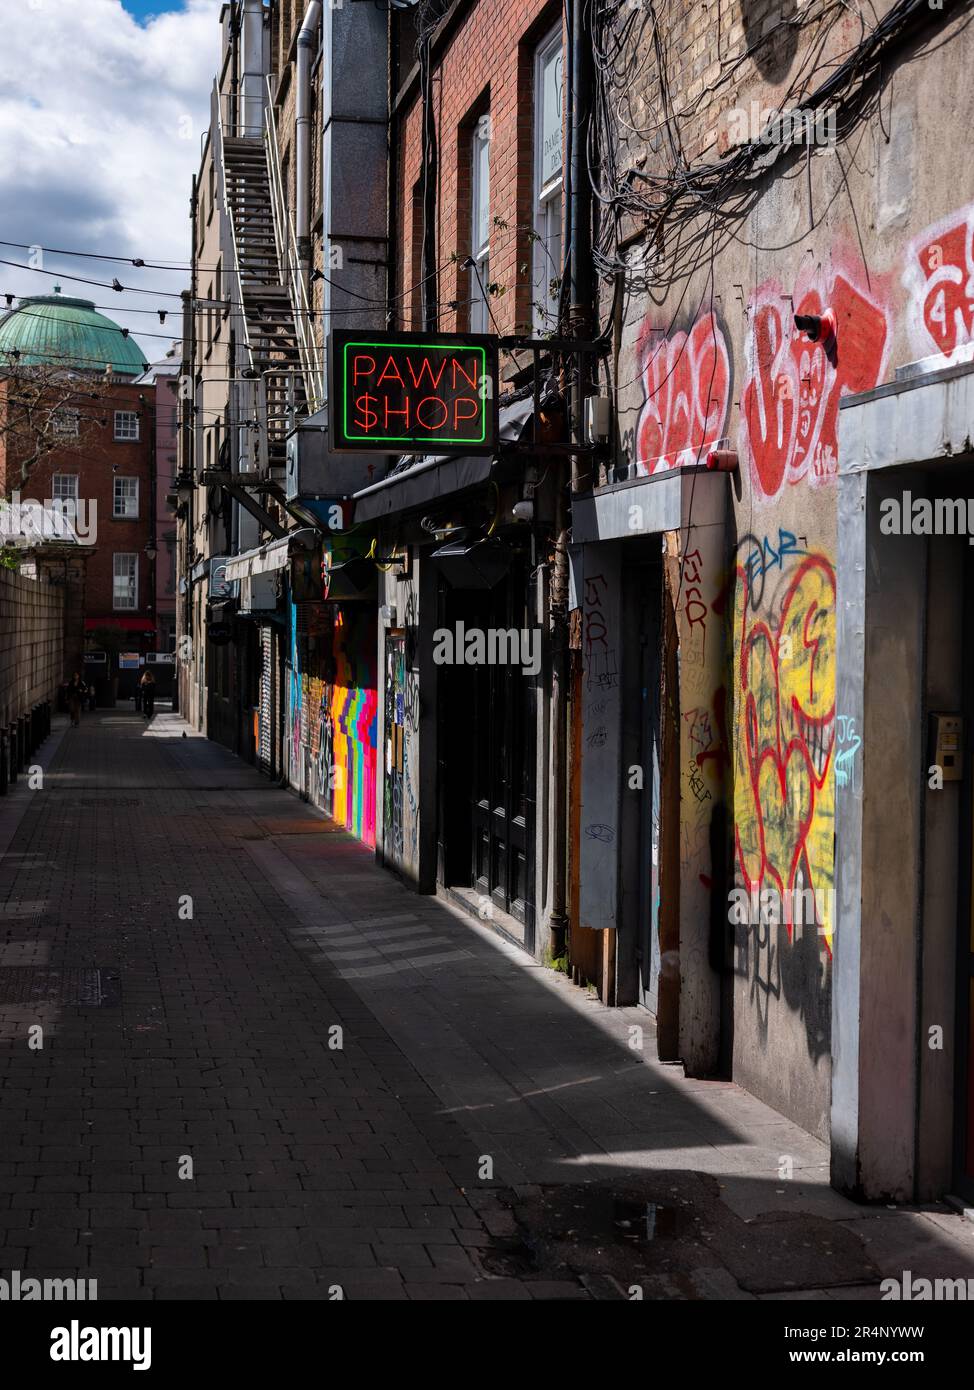 A neon sign reading 'PAWN SHOP' in Dublin city, Ireland. Stock Photo